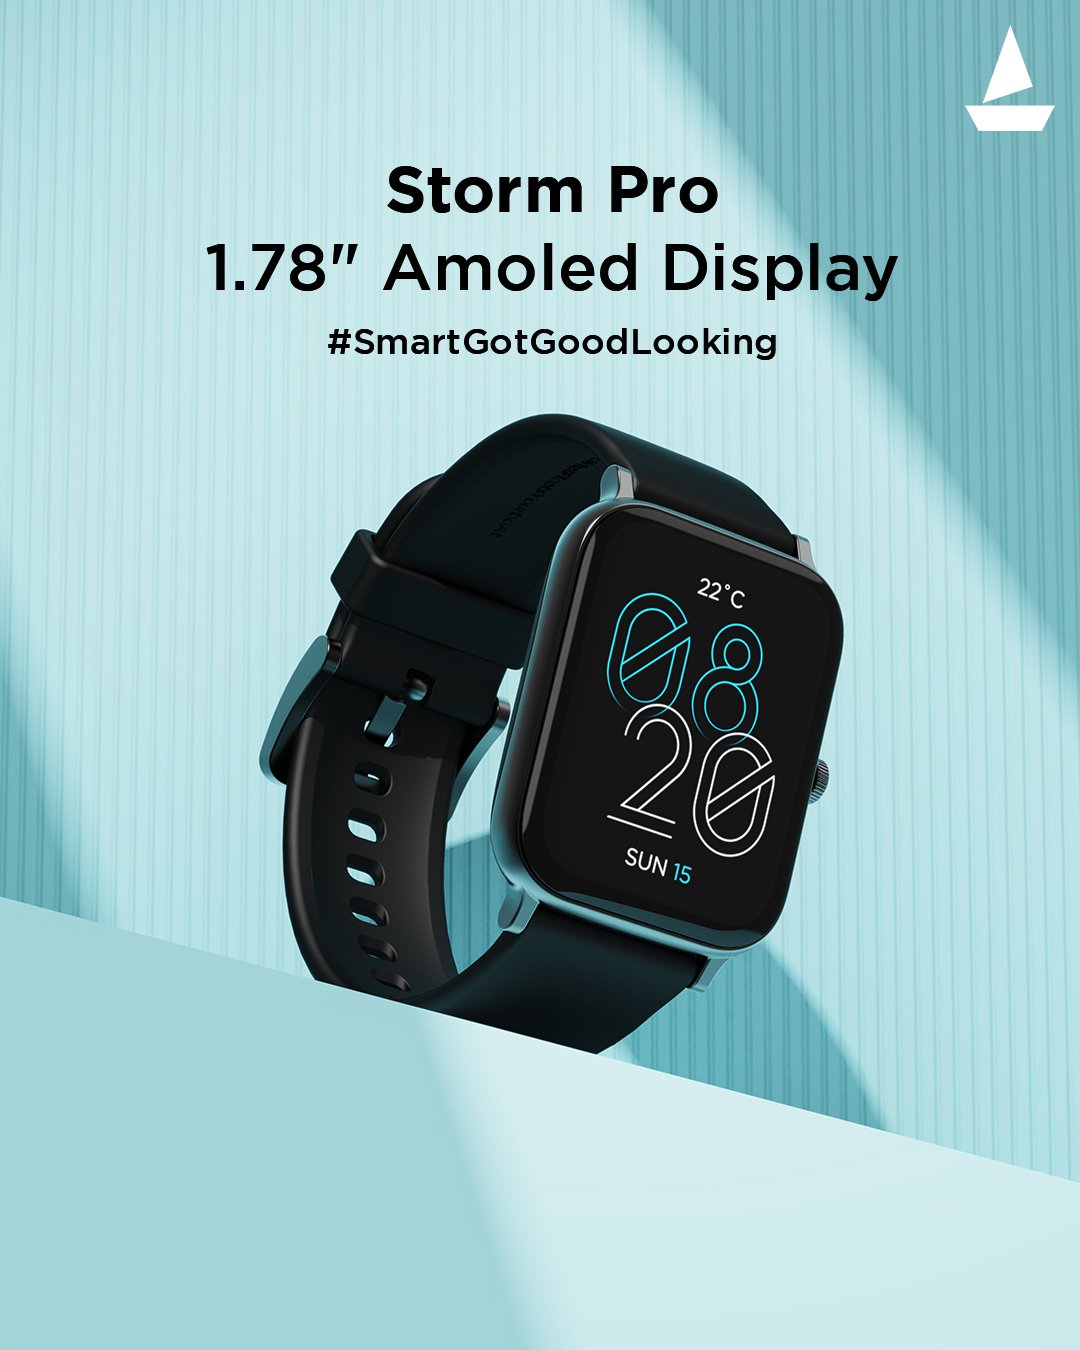 boAt Storm Pro image